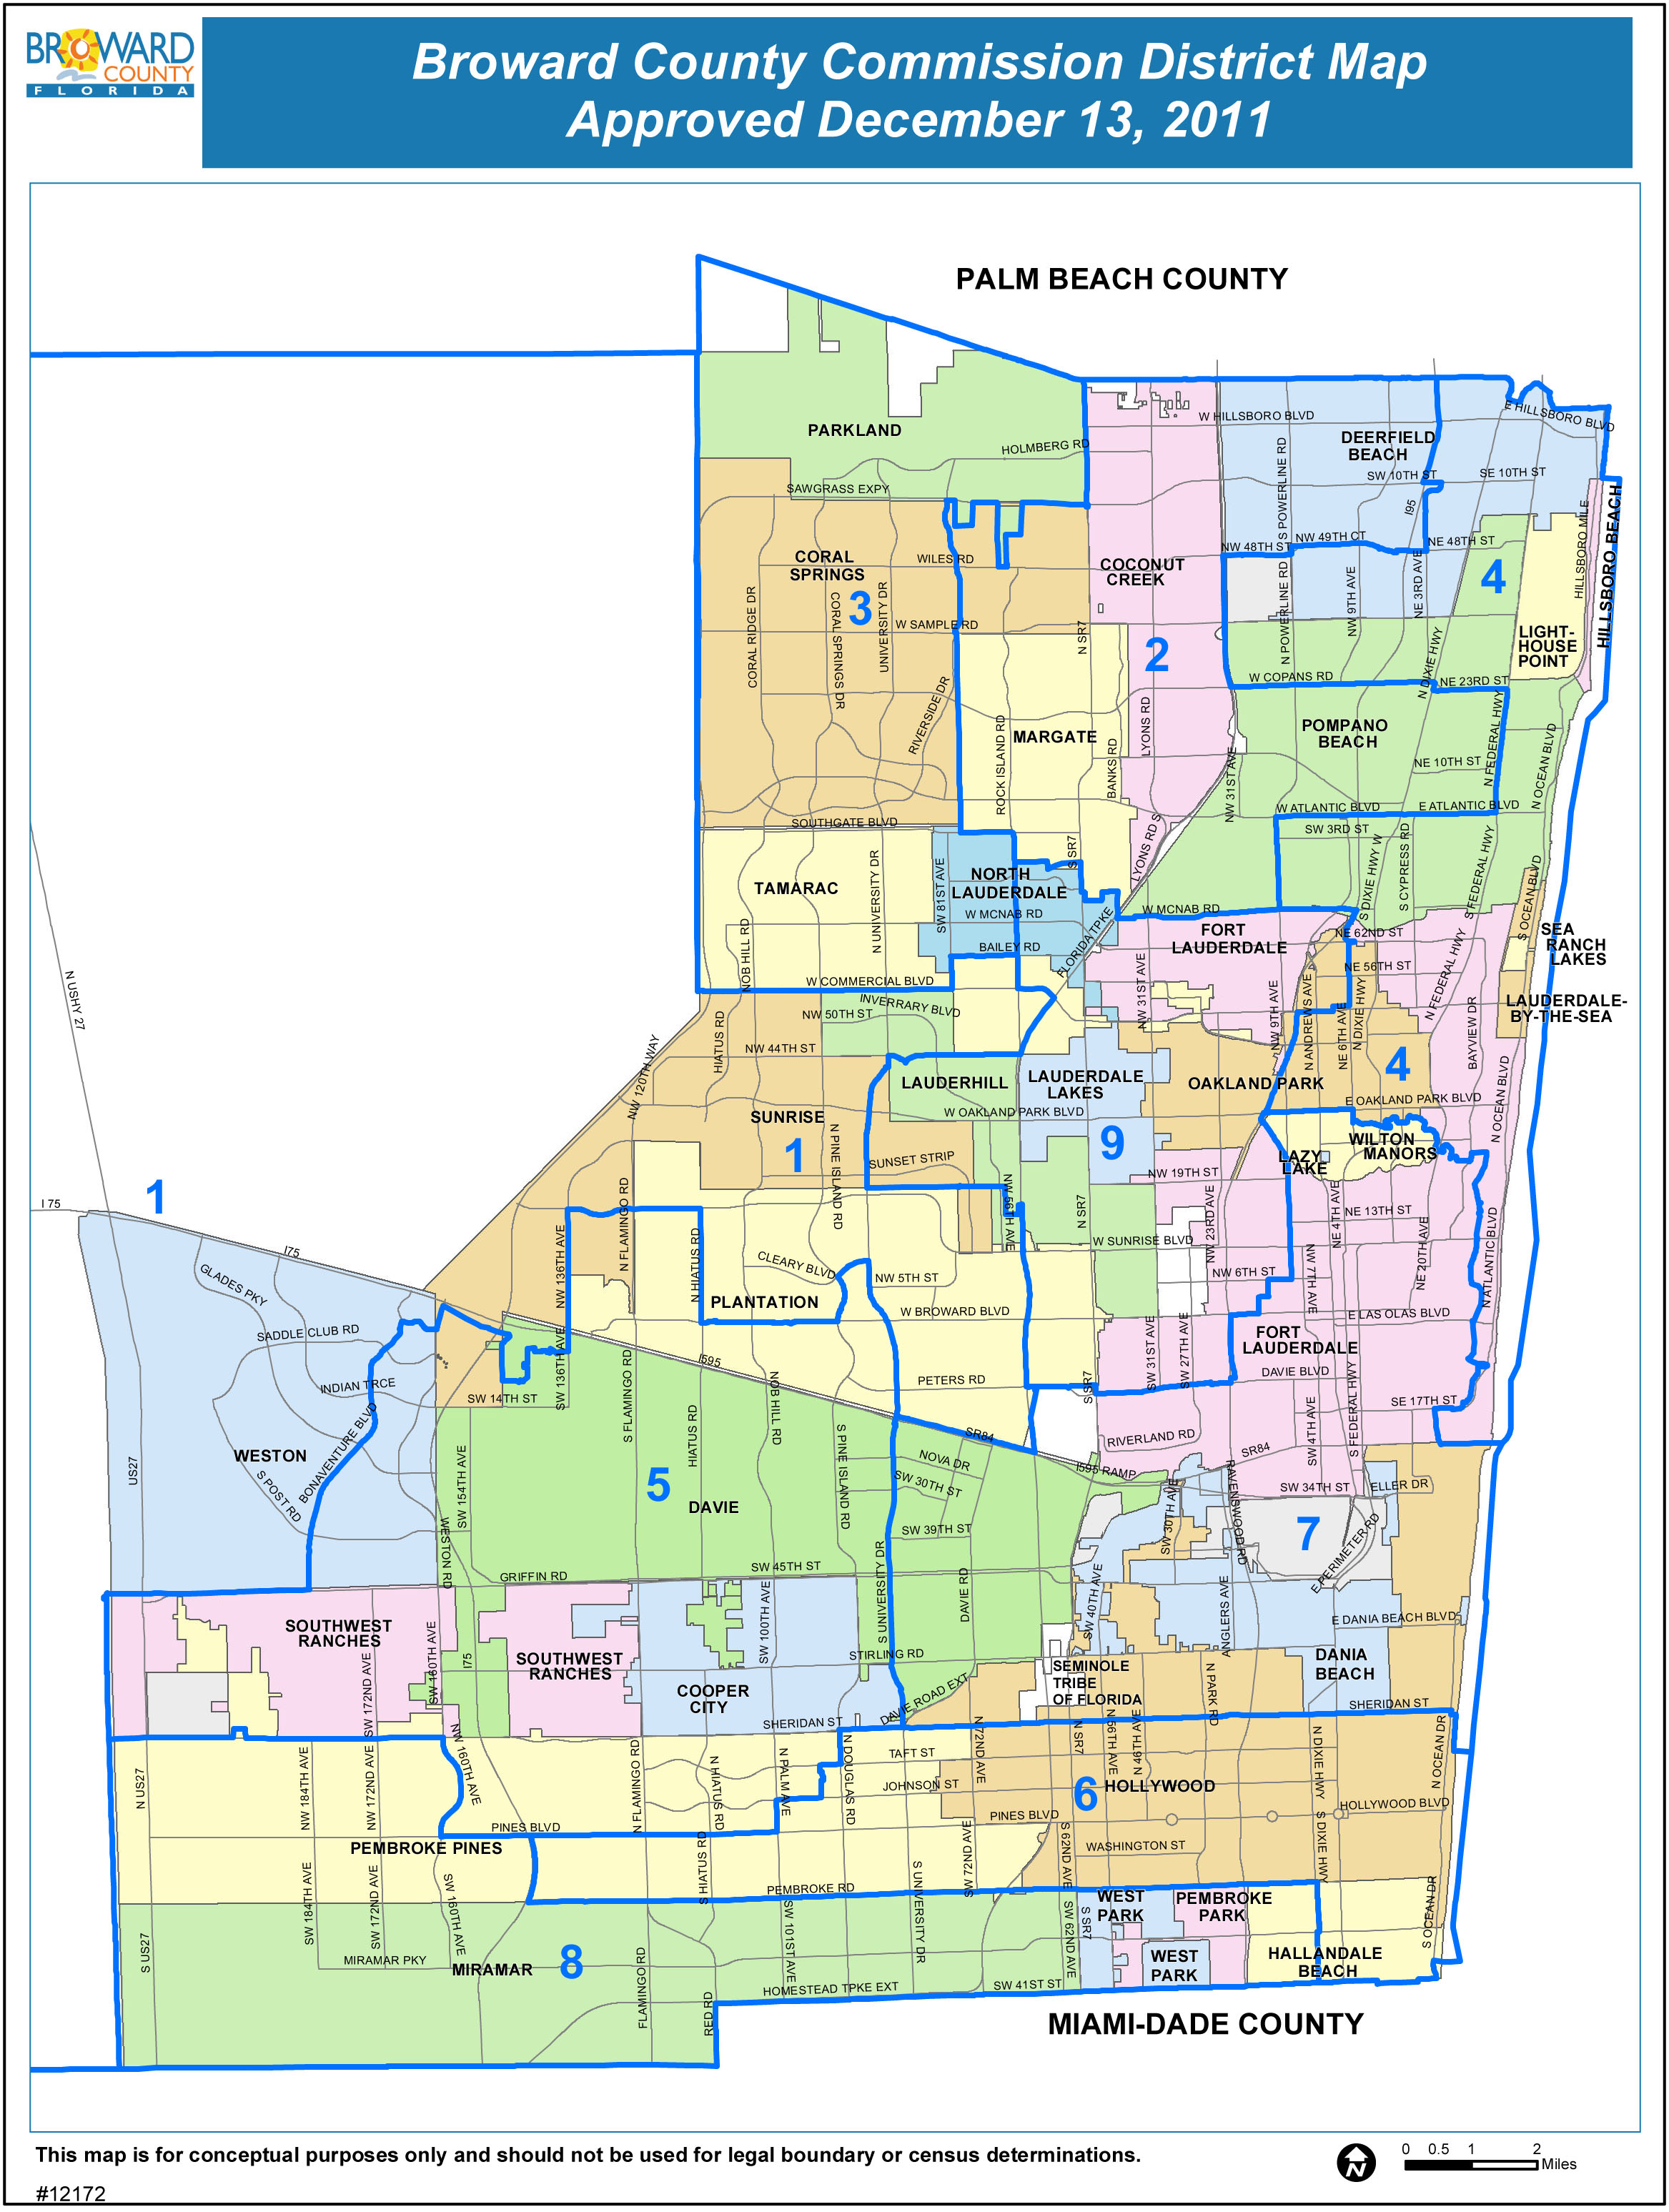 approved district map december 13, 2011 » tamarac talk